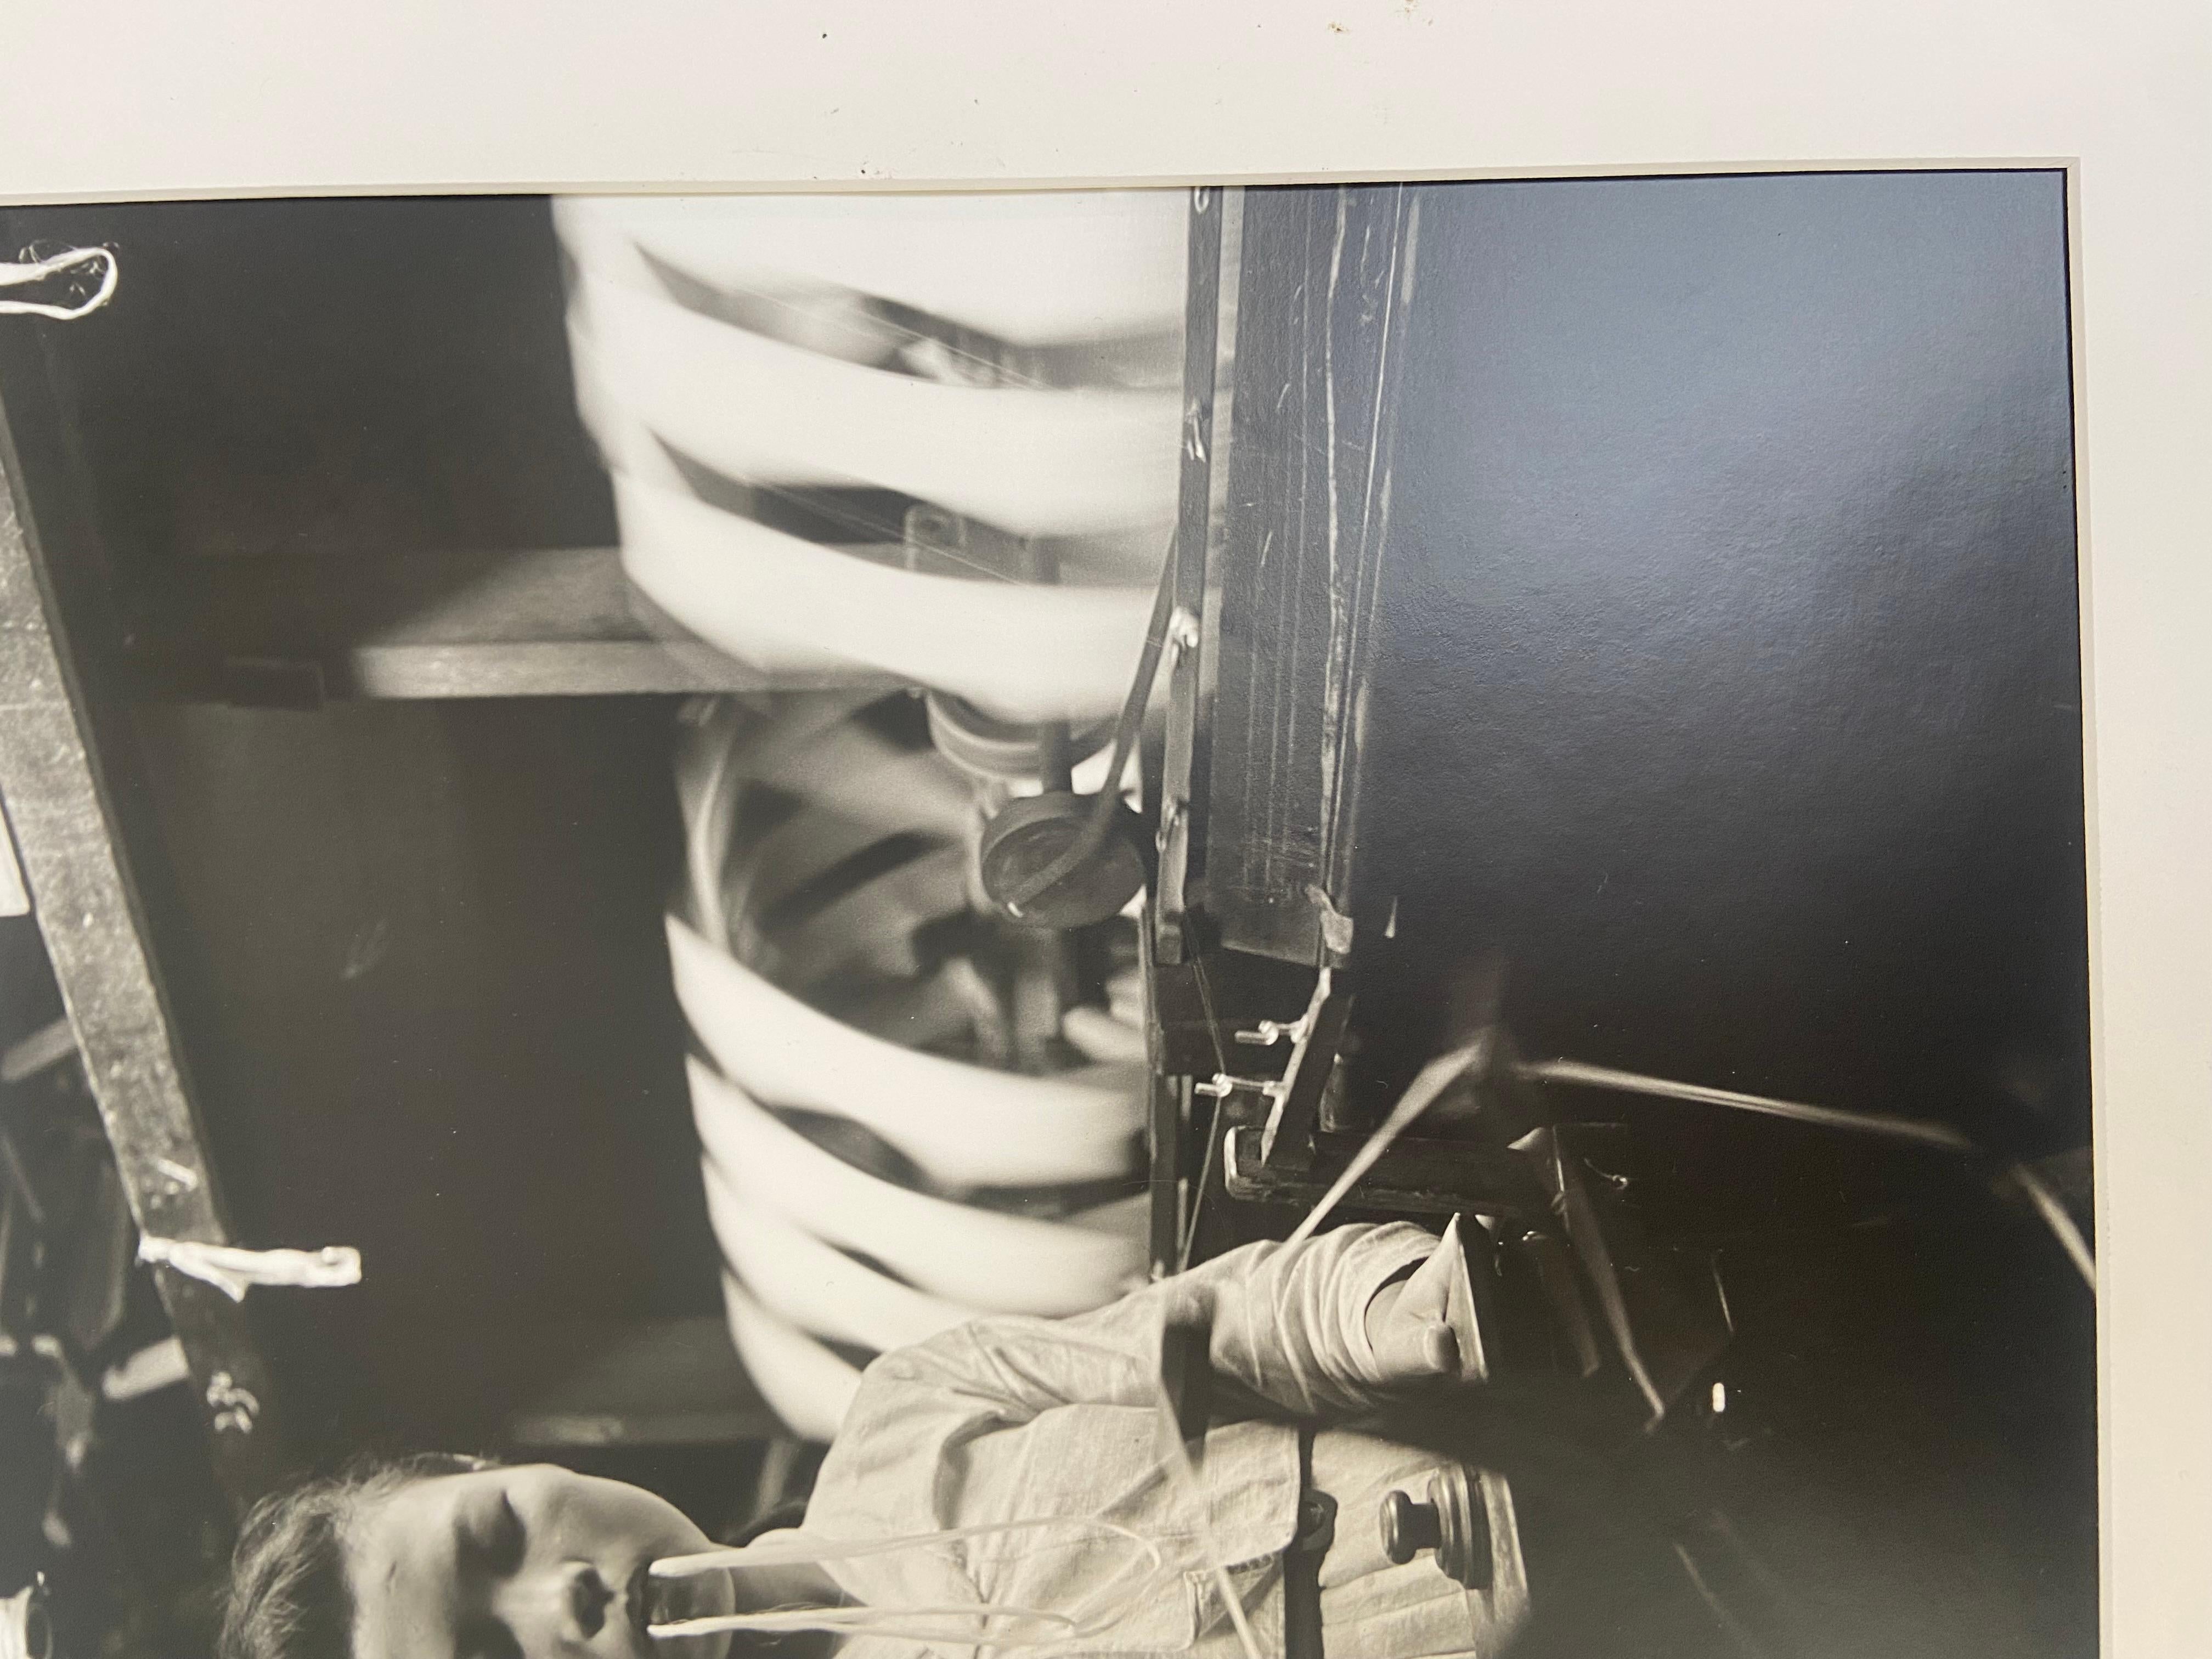 Horace Bristol
Untitled , c. 1940s
Black & White Photograph
Image Dimensions: 10 x 9 3/4 inches  (25.4 x 24.8 cm)
Paper Dimensions: 14 x 11 inches
Mounted Dimensions: 20 x 16 inches  (50.8 x 40.6 cm)
stamped verso